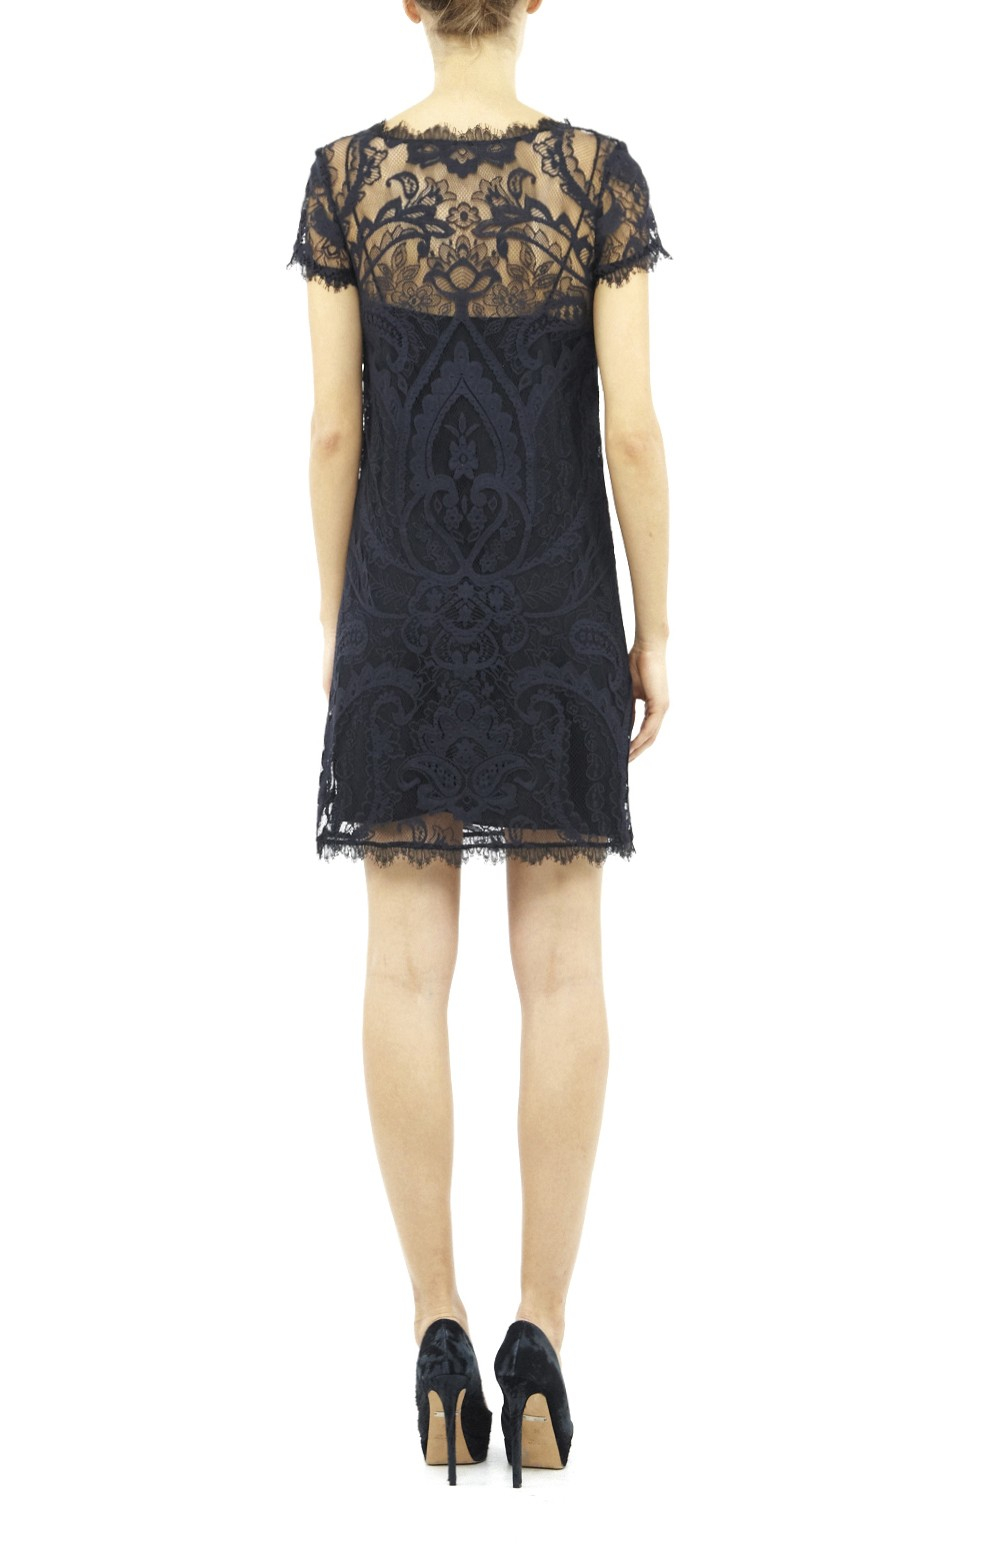 Lyst - Nicole Miller Sleeveless Combo Dress W/cutouts in Black